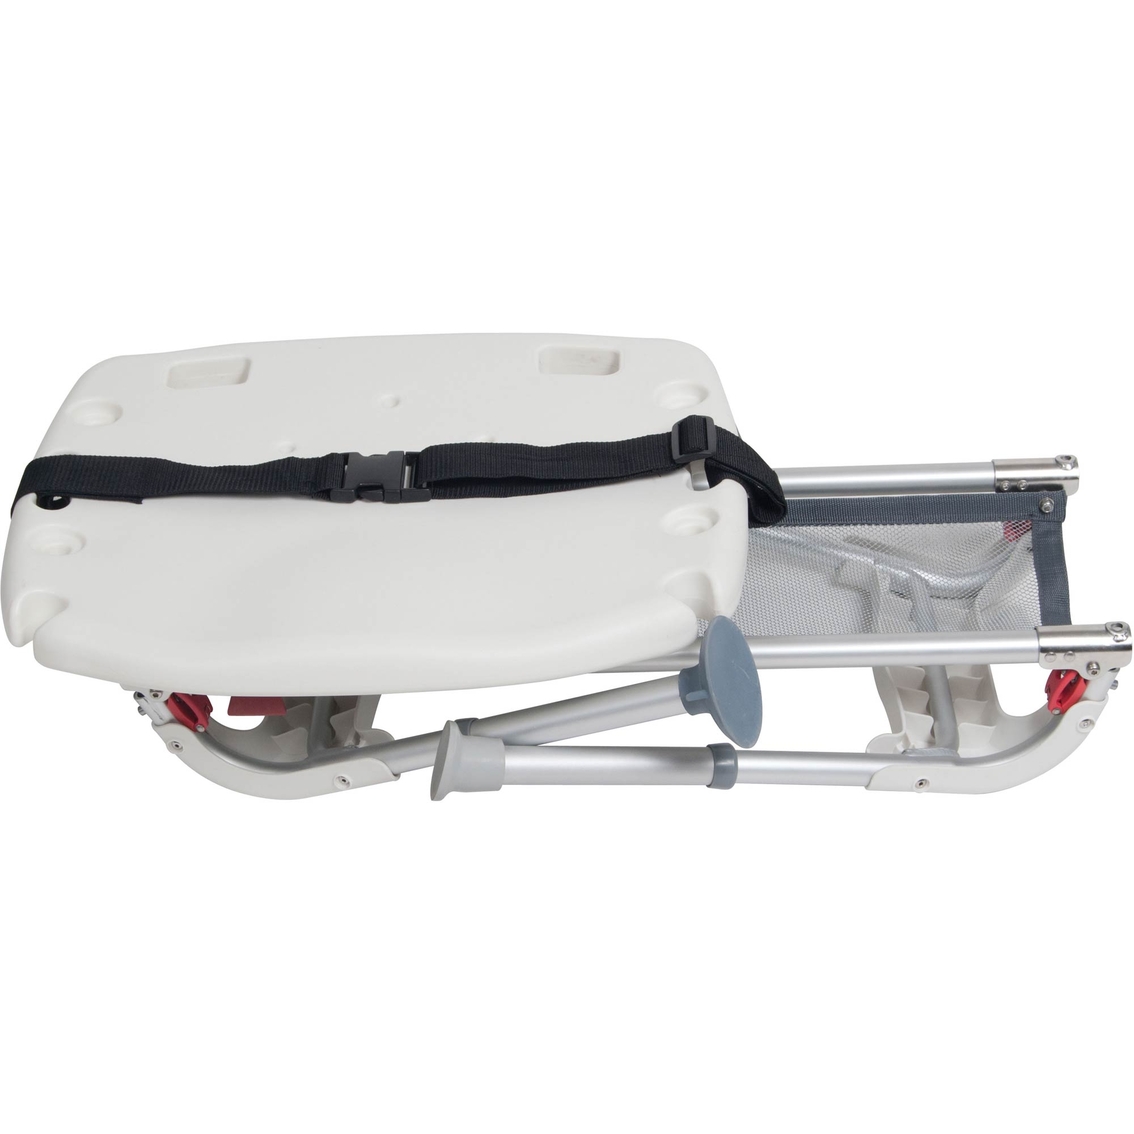 Drive Medical Folding Universal Sliding Transfer Bench - Image 2 of 3